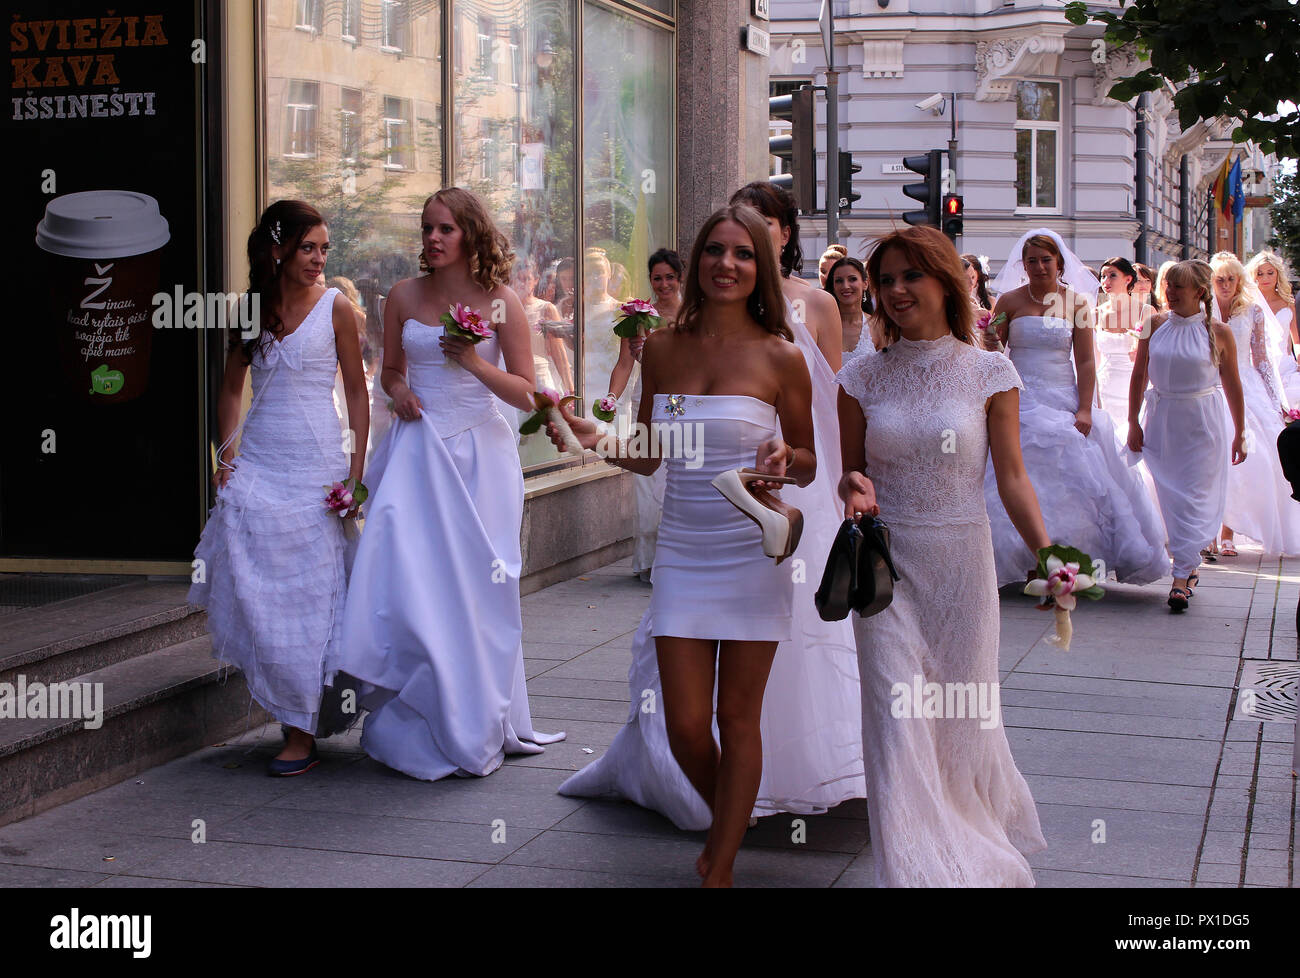 Bridal fashion parade on the streets of Vilnius, Lithuania Stock Photo